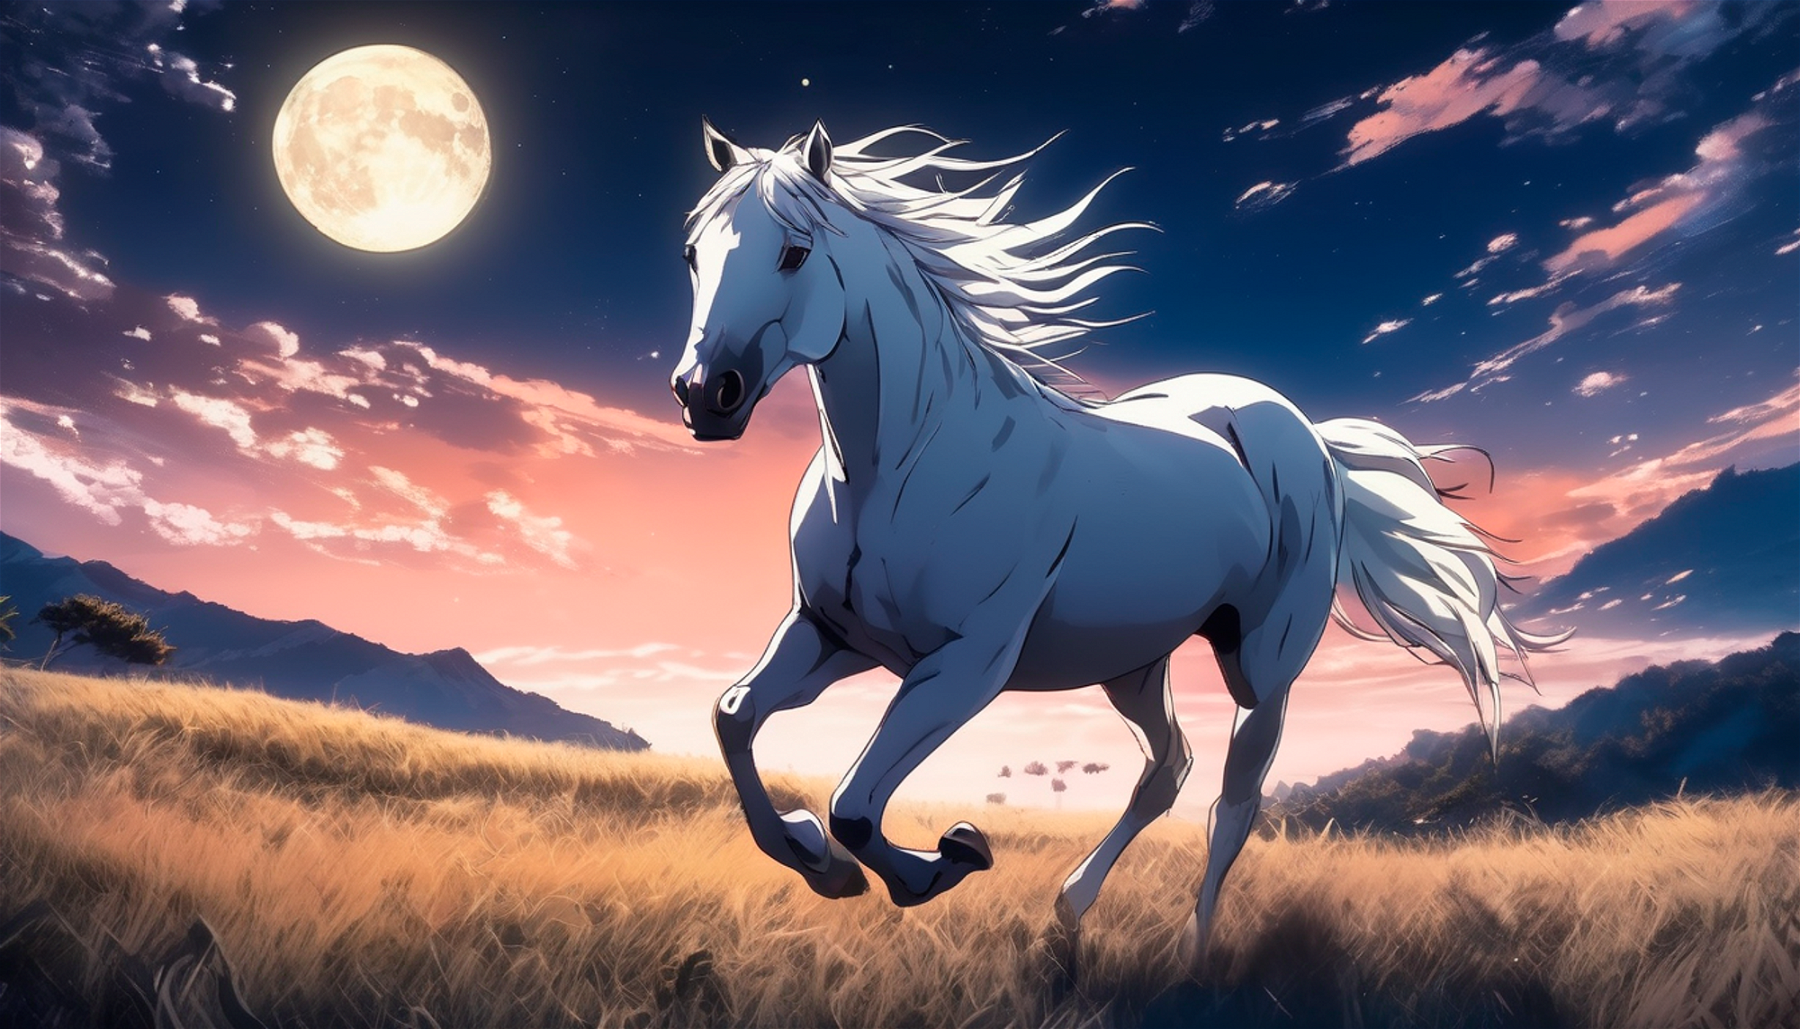 anime artwork cinematic film still horse running in the wild under the moon light, white fur . anime style, key visual, vibrant, studio anime, highly detailed